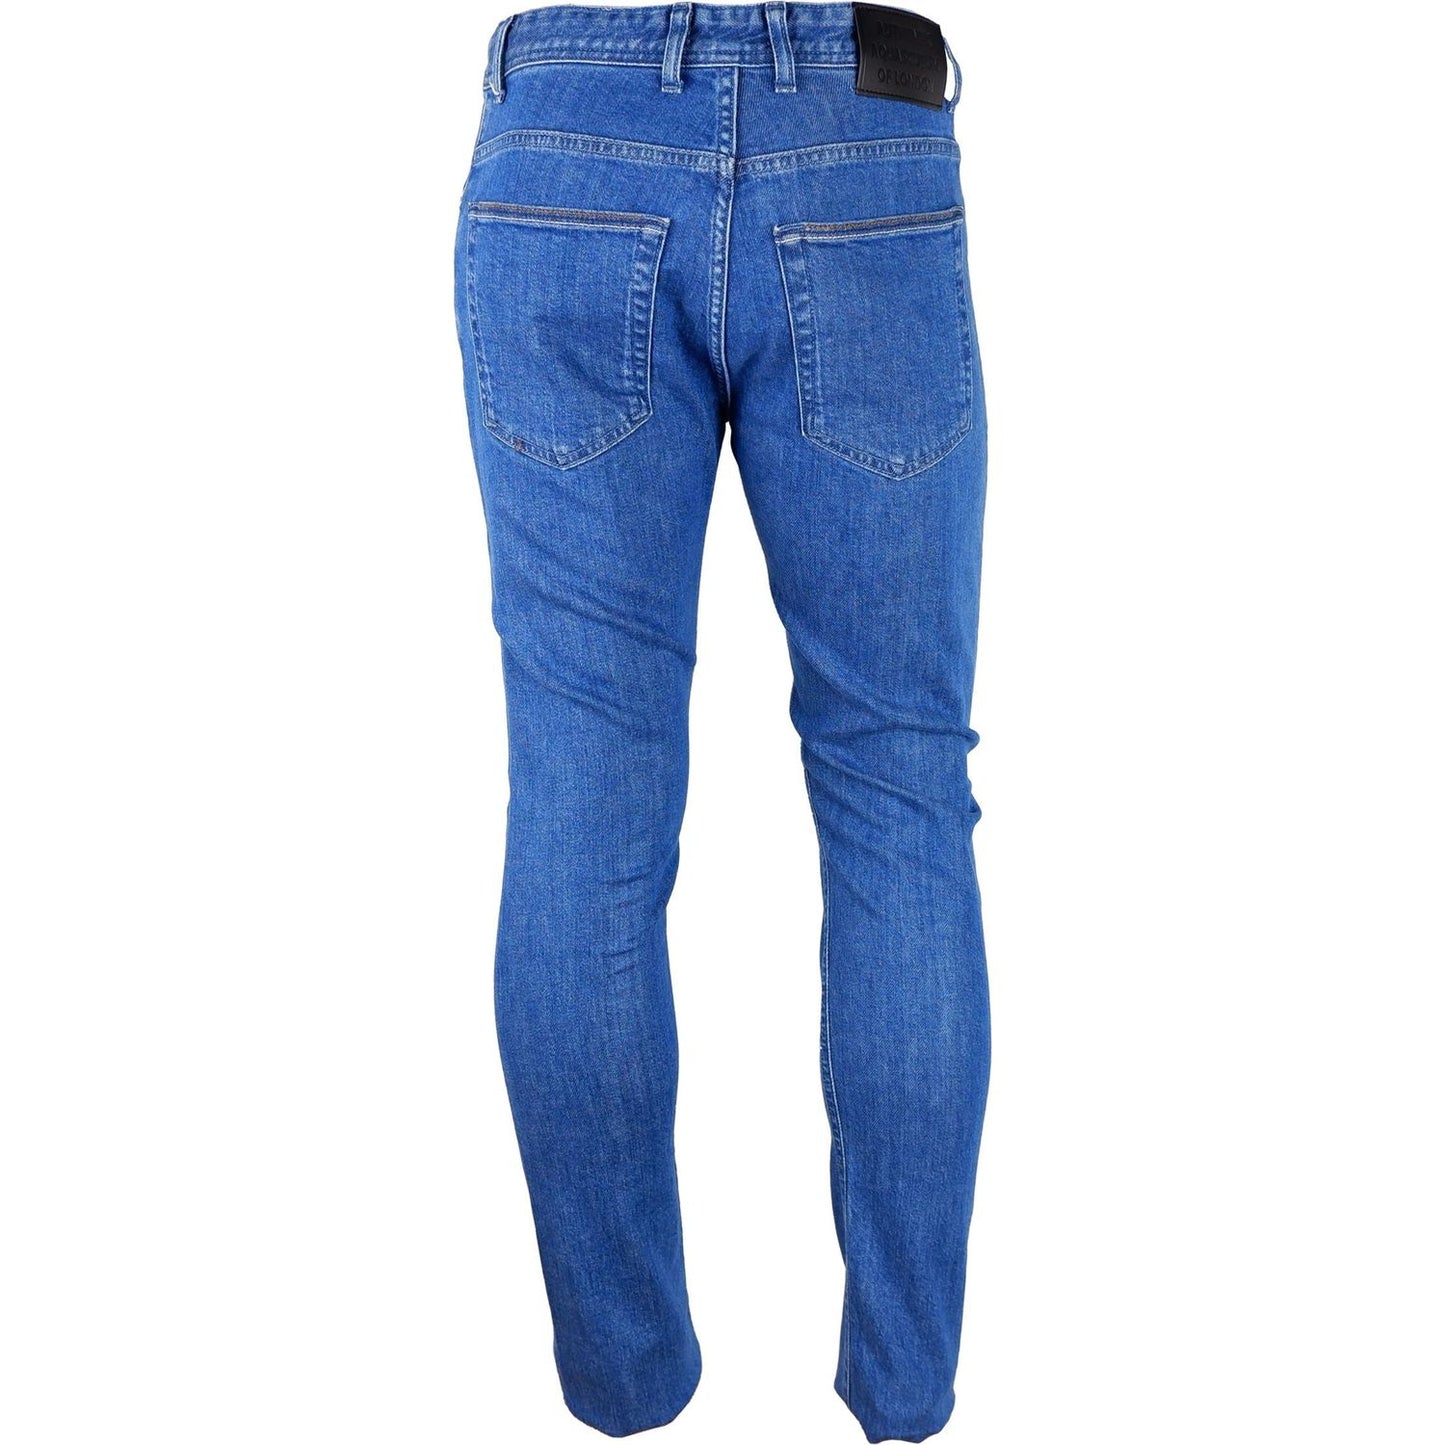 Aquascutum Chic Light Blue Cotton Denim Jeans chic-light-blue-cotton-denim-jeans